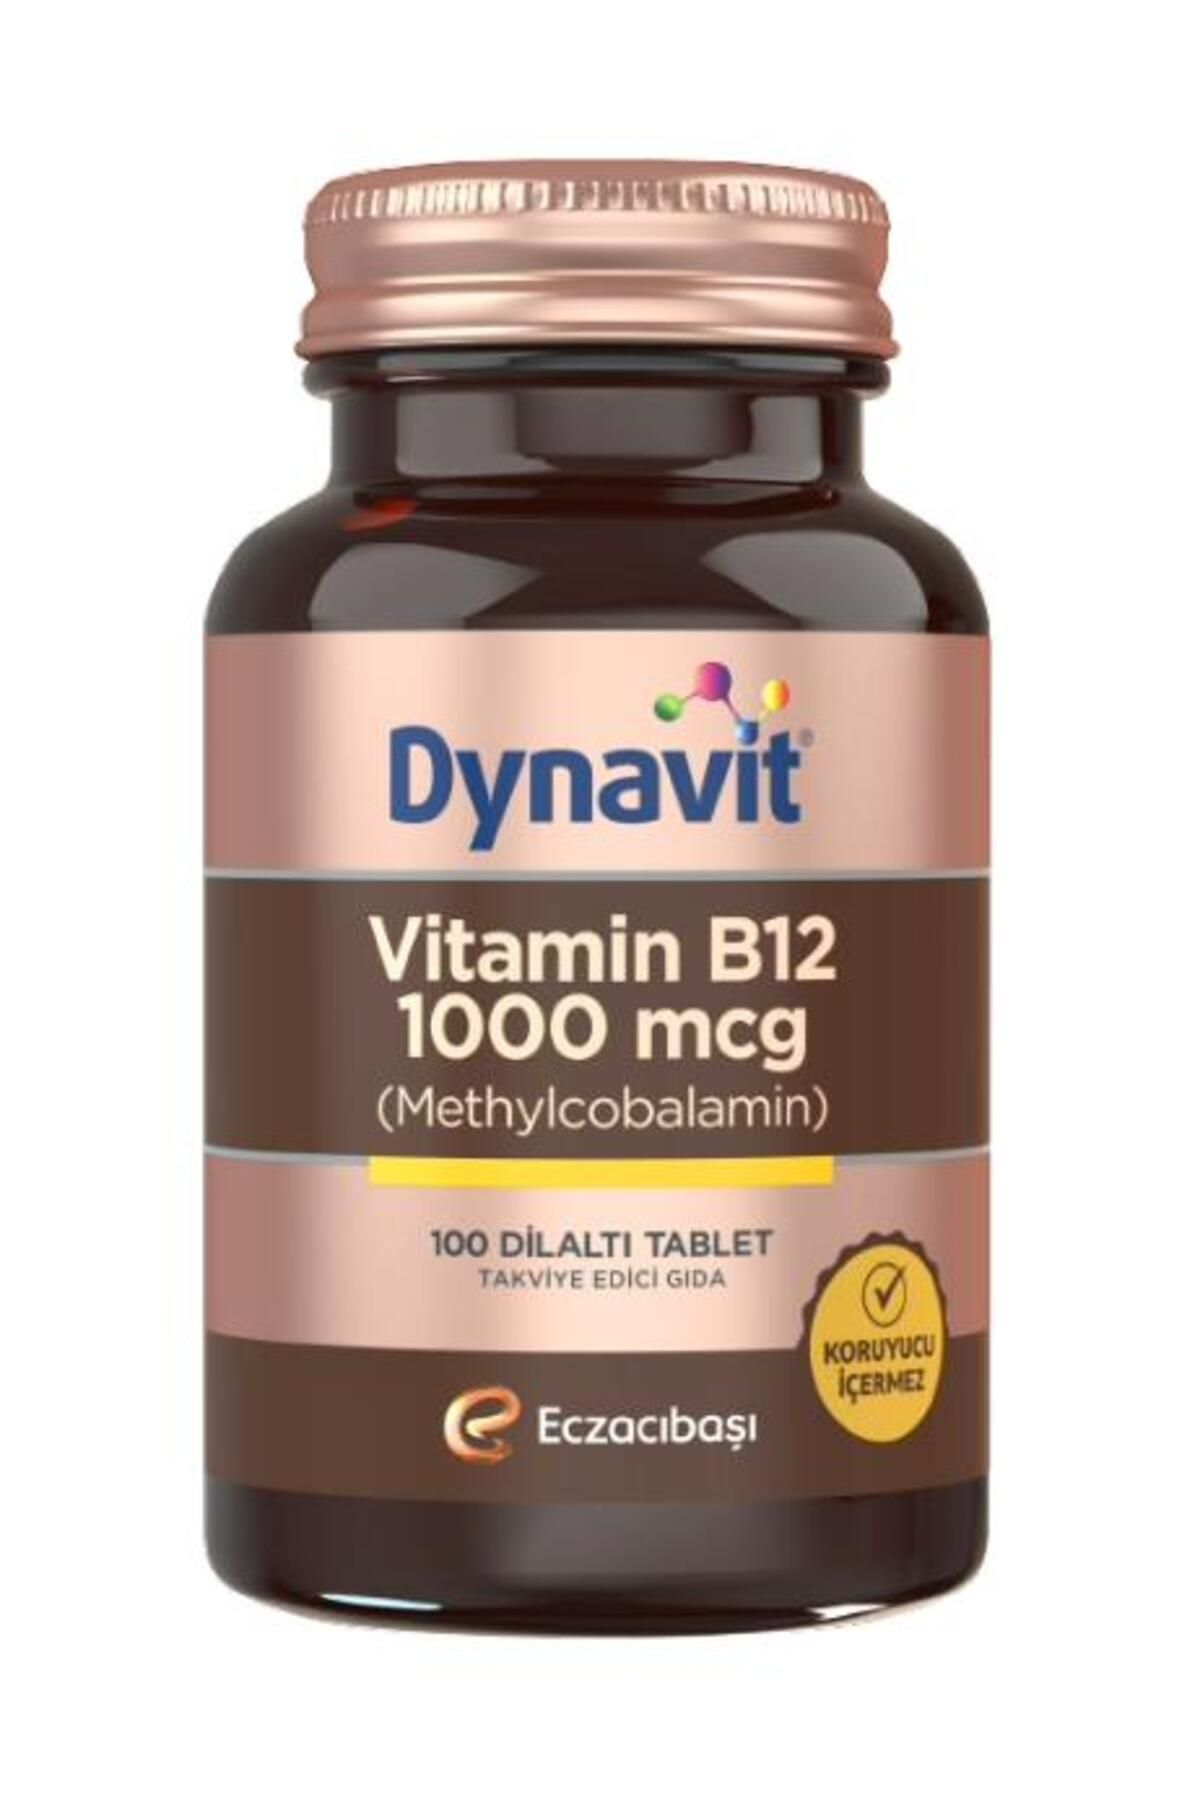 Eczacıbaşı Dynavit Vitamin B12 1000 mcg 100 Tablet